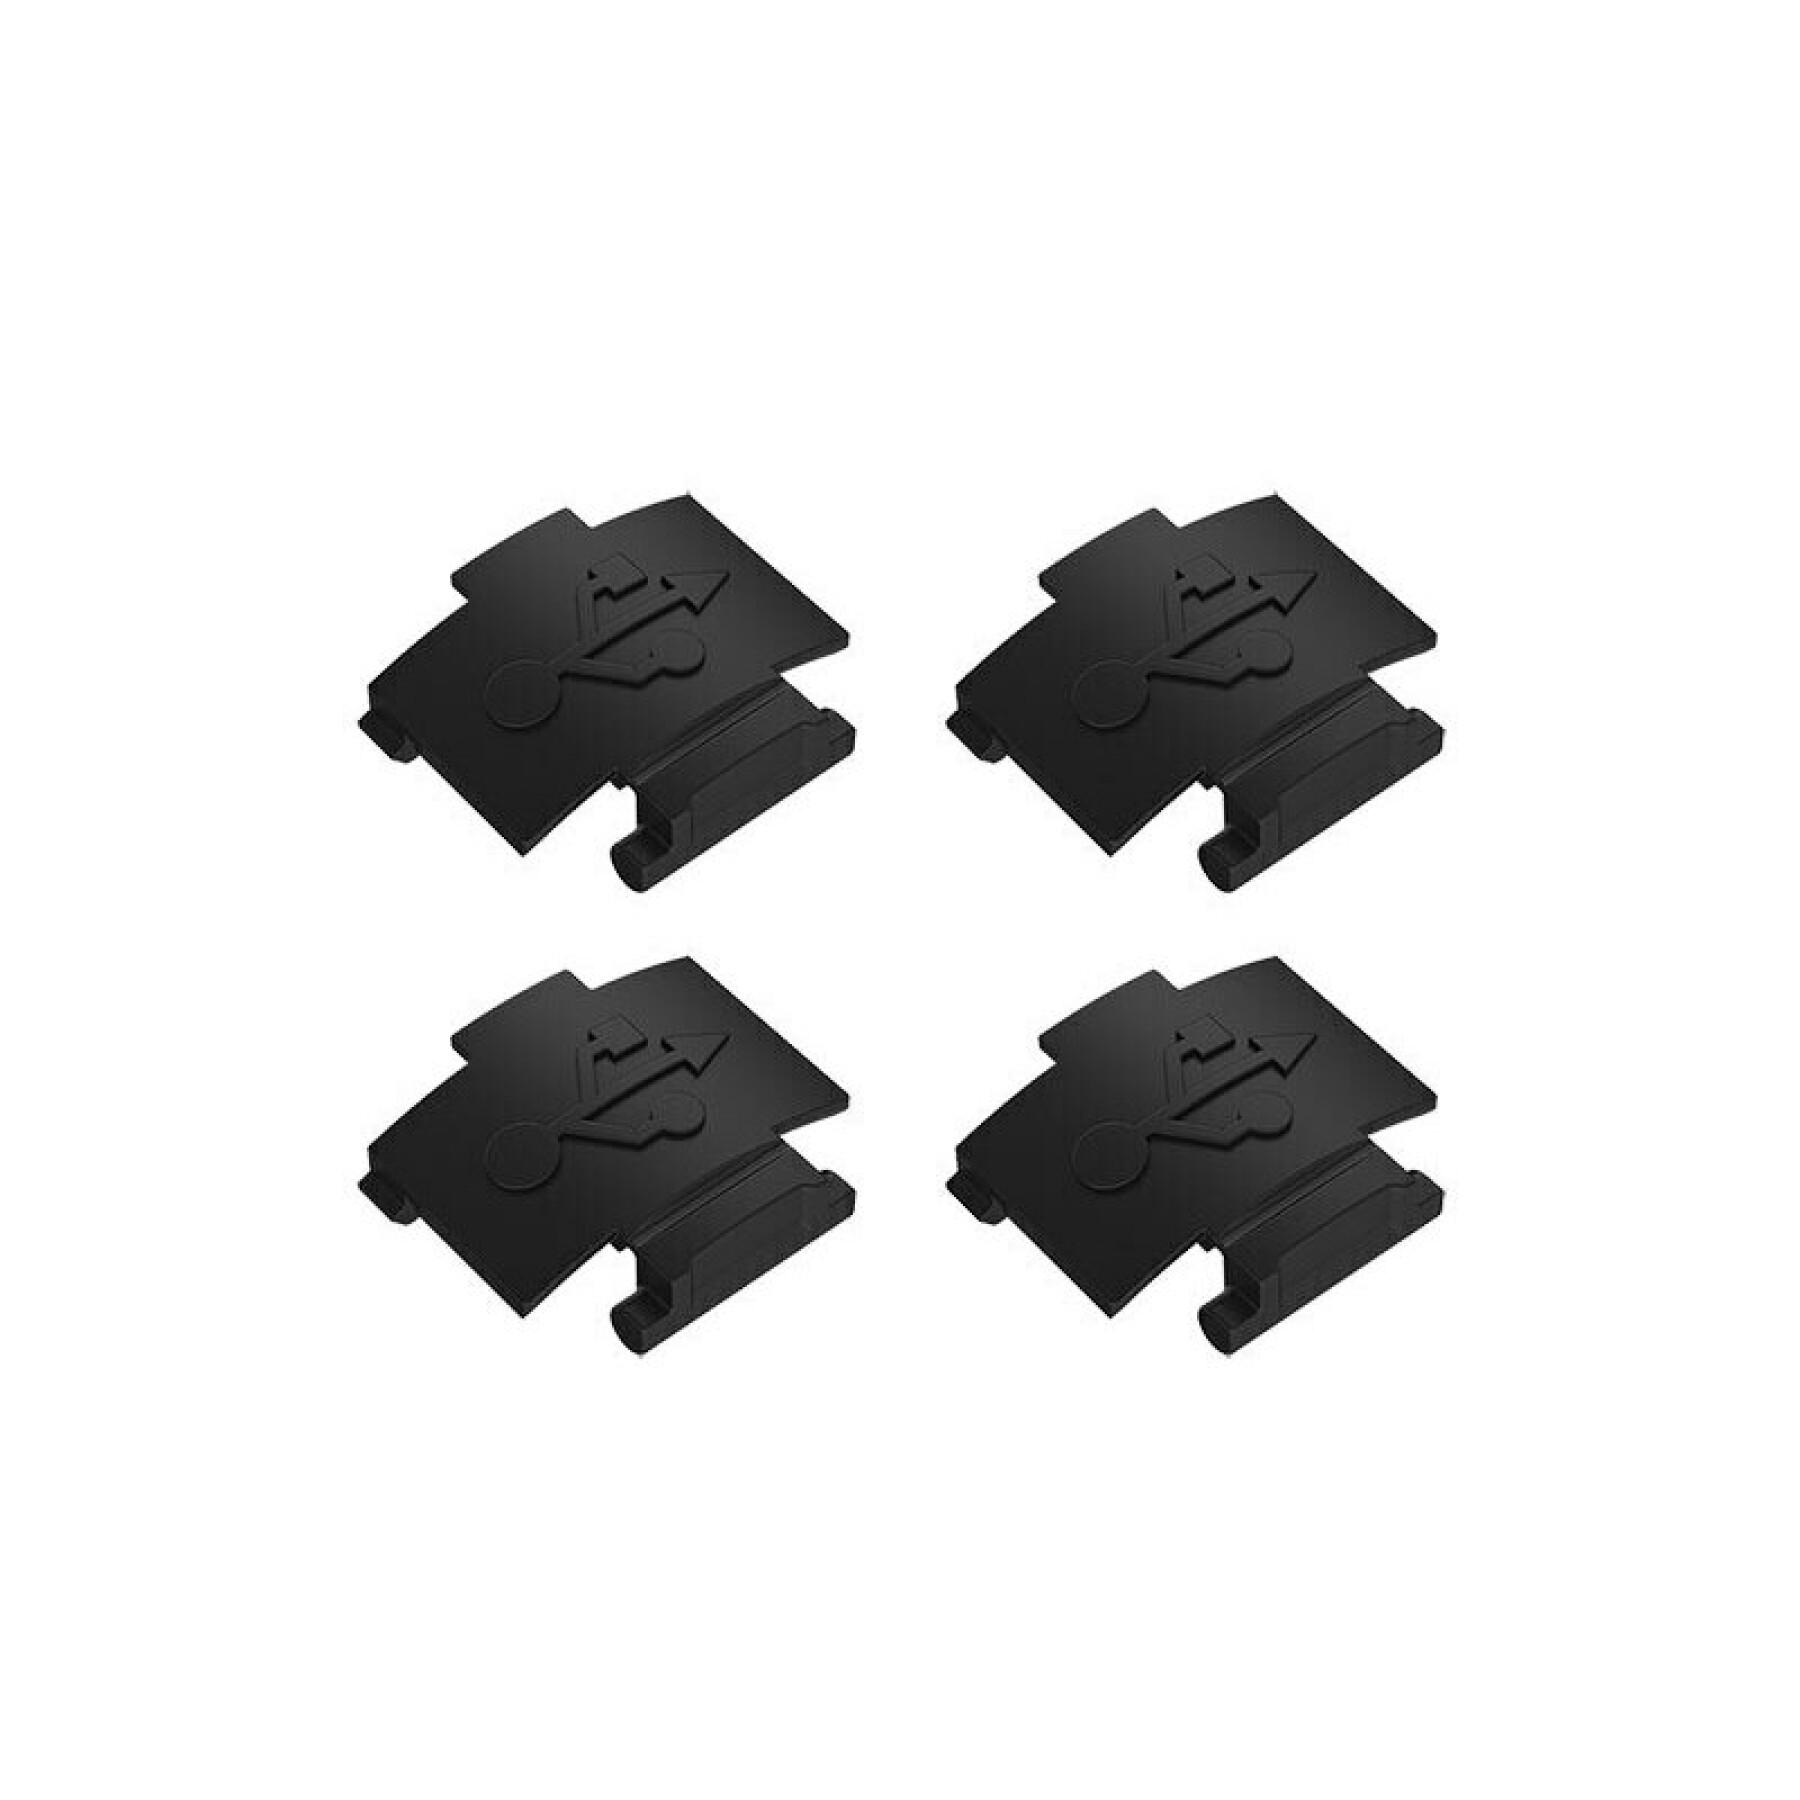 Set of 4 rubber caps for the bepro micro-usb slot Favero